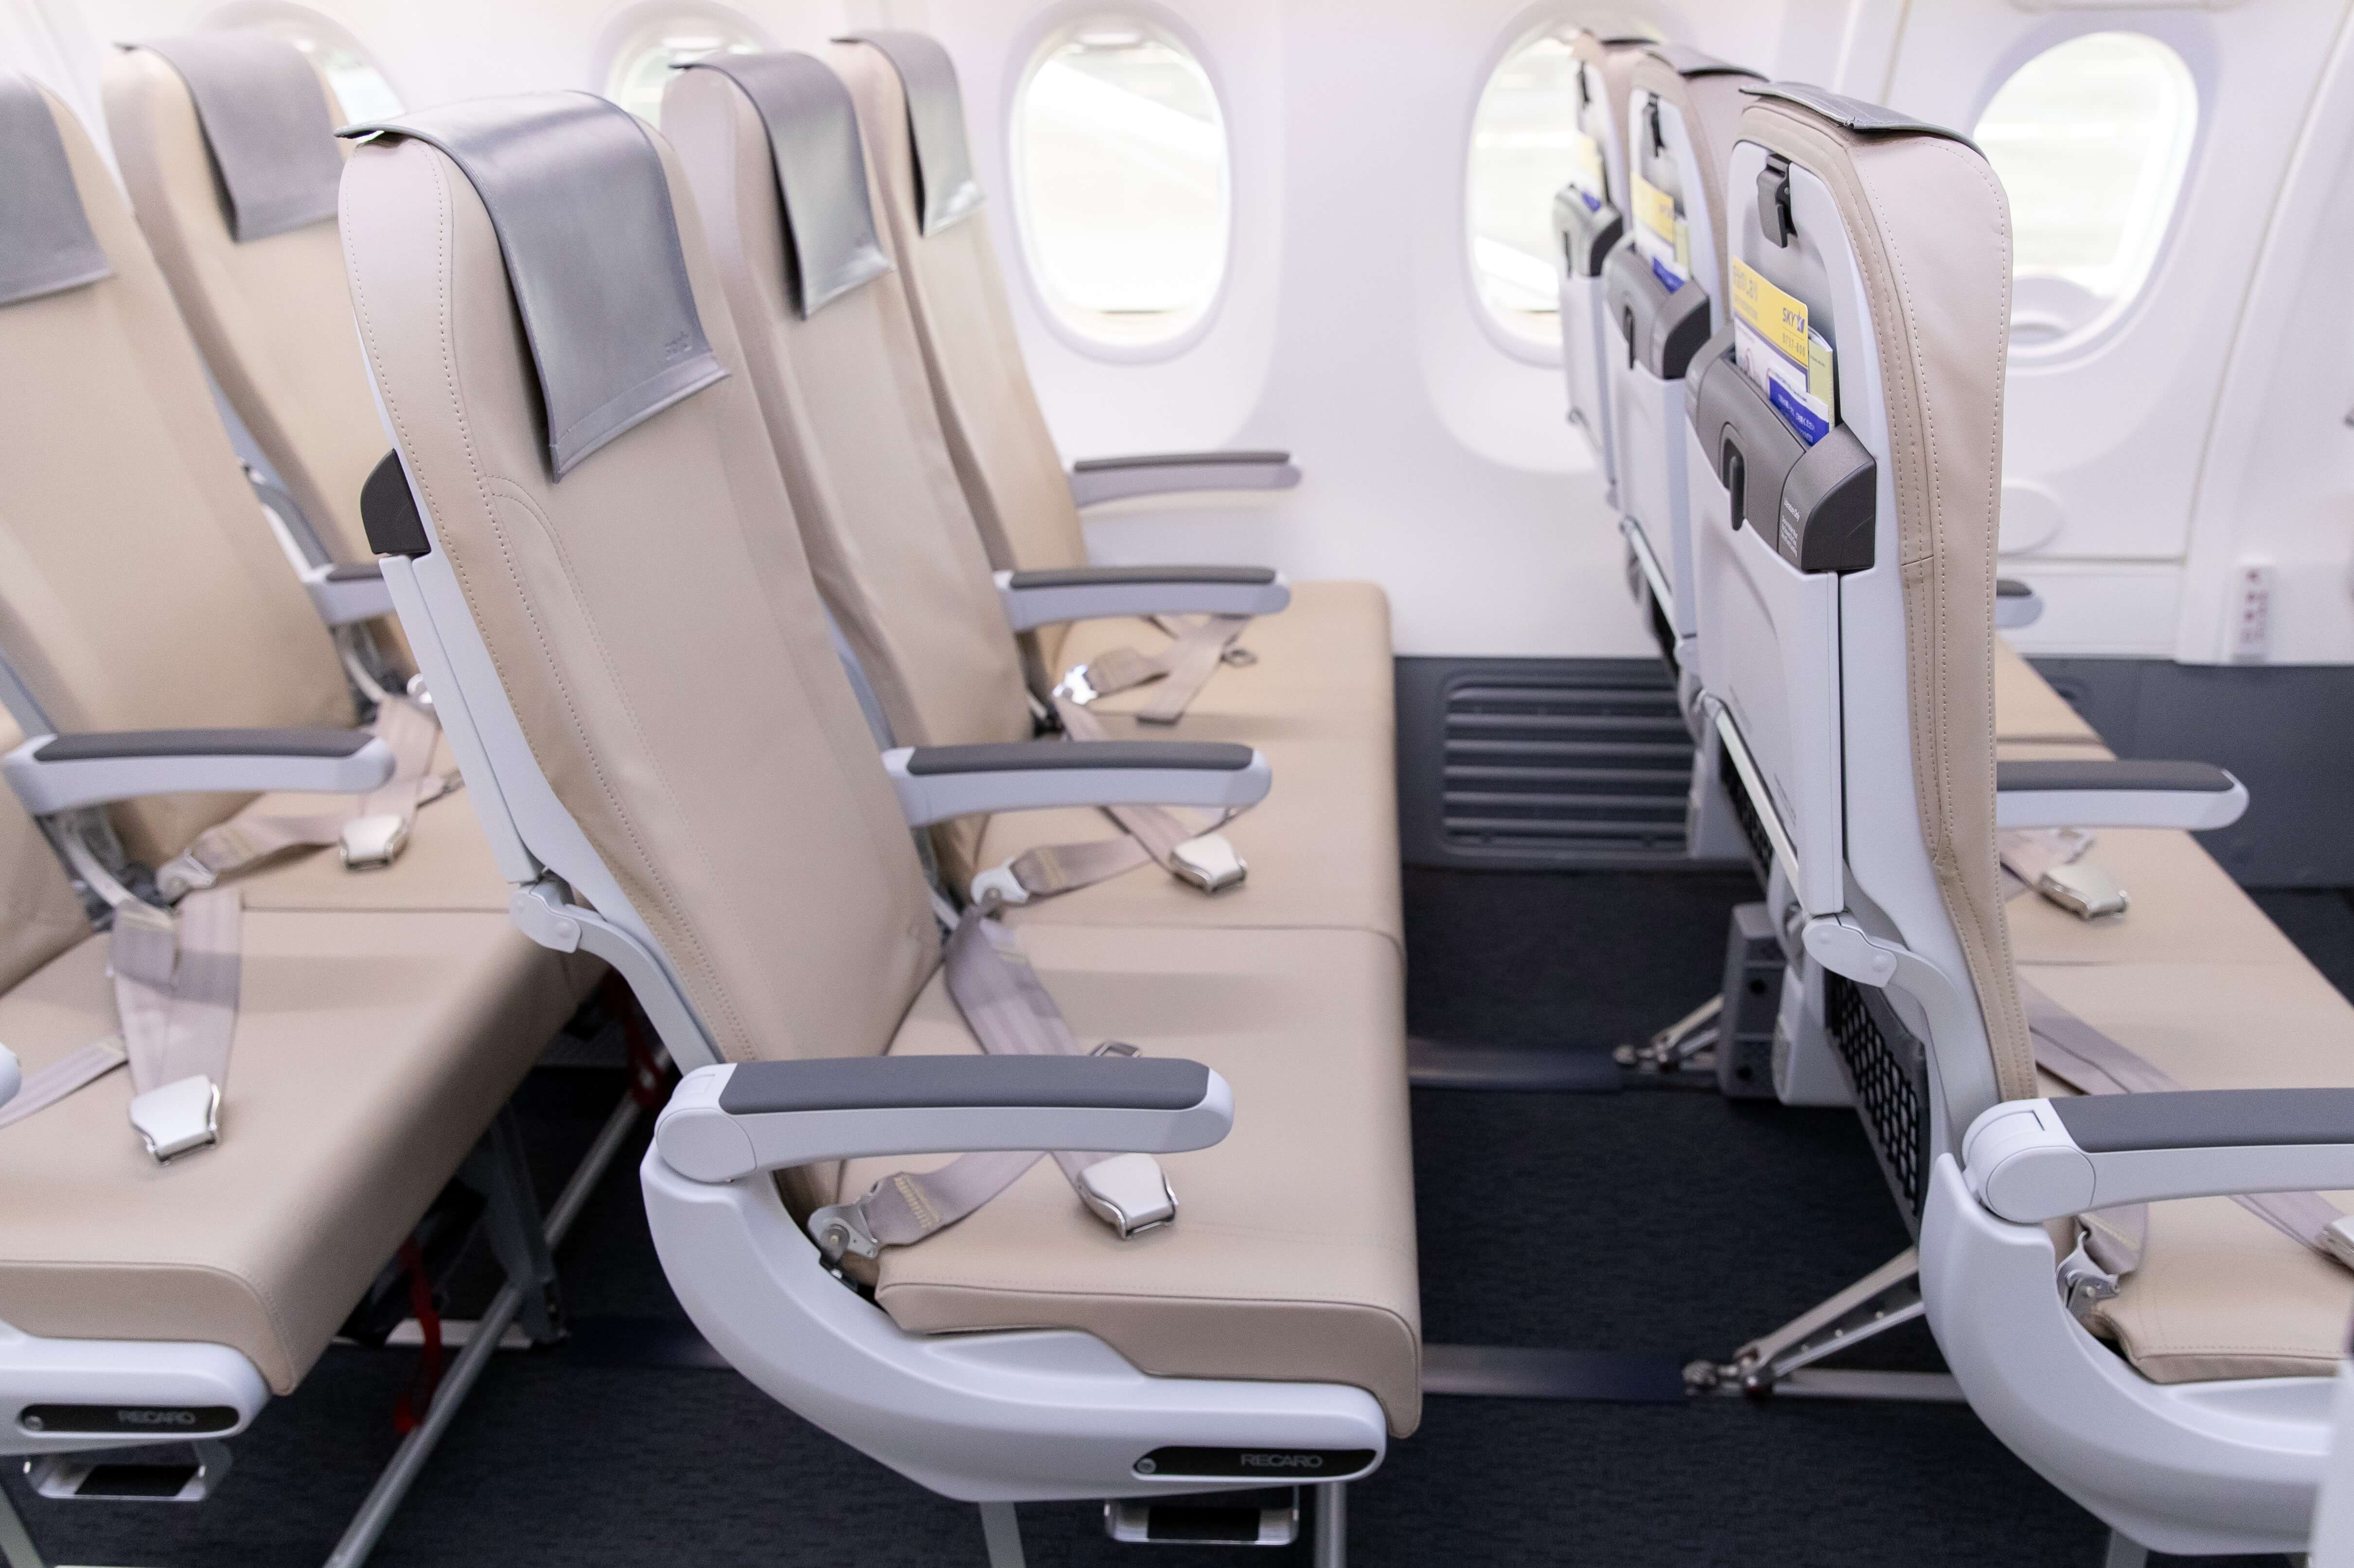 Skymark selects RECARO economy class seats